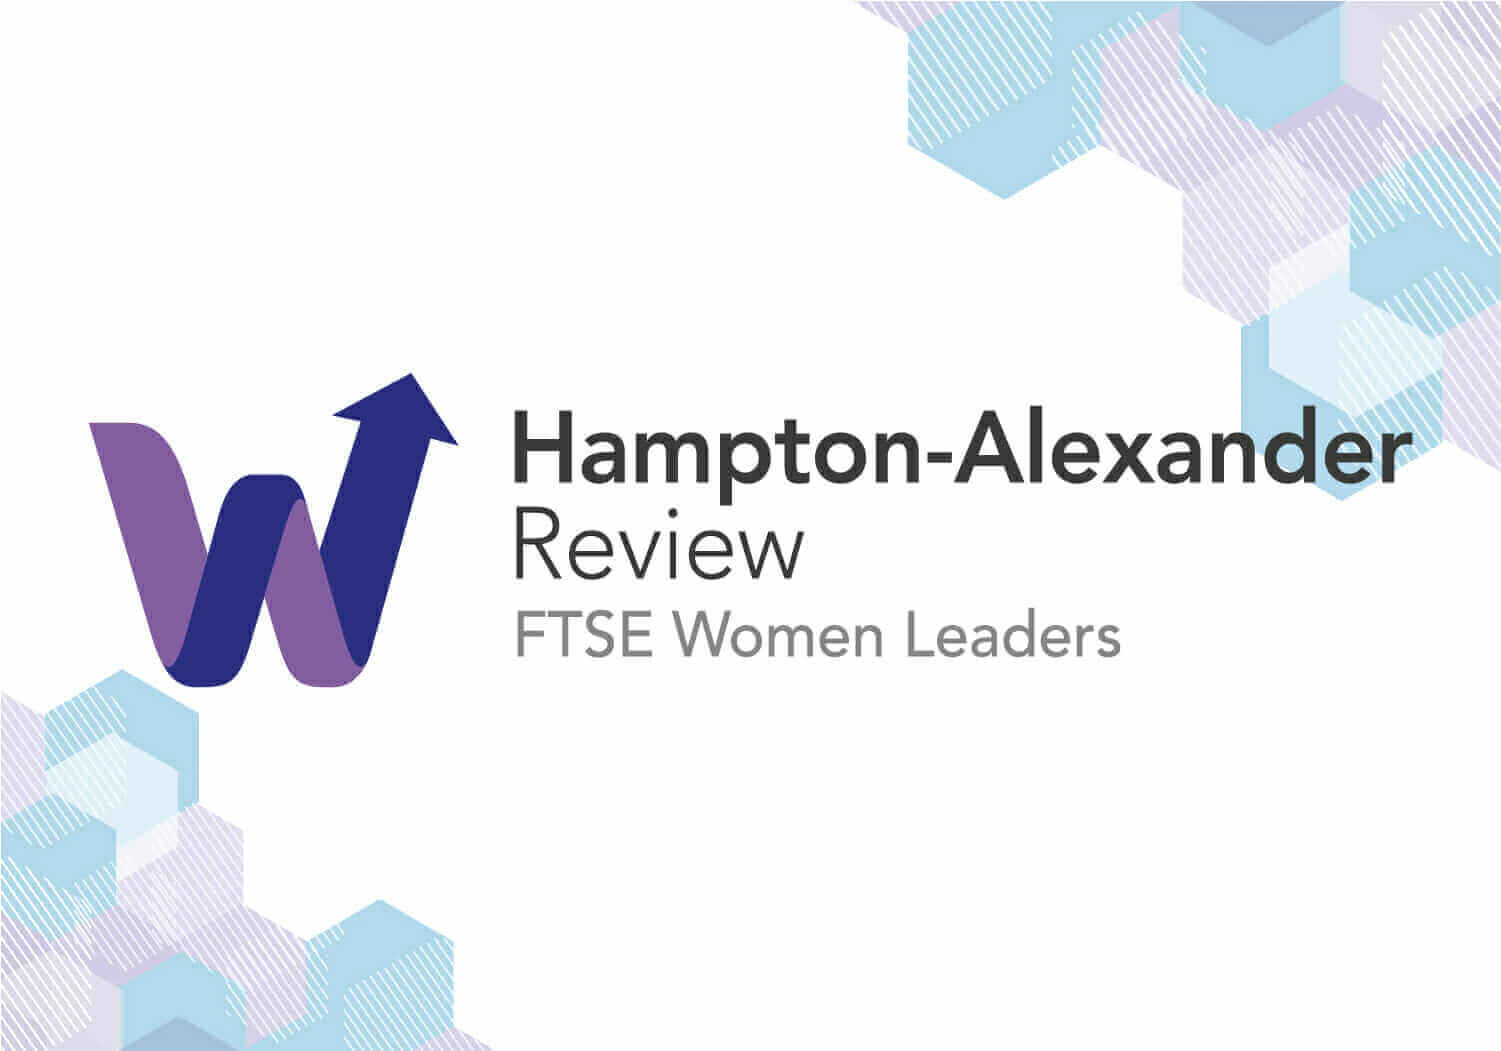 Hampton-Alexander Review 2020 Report